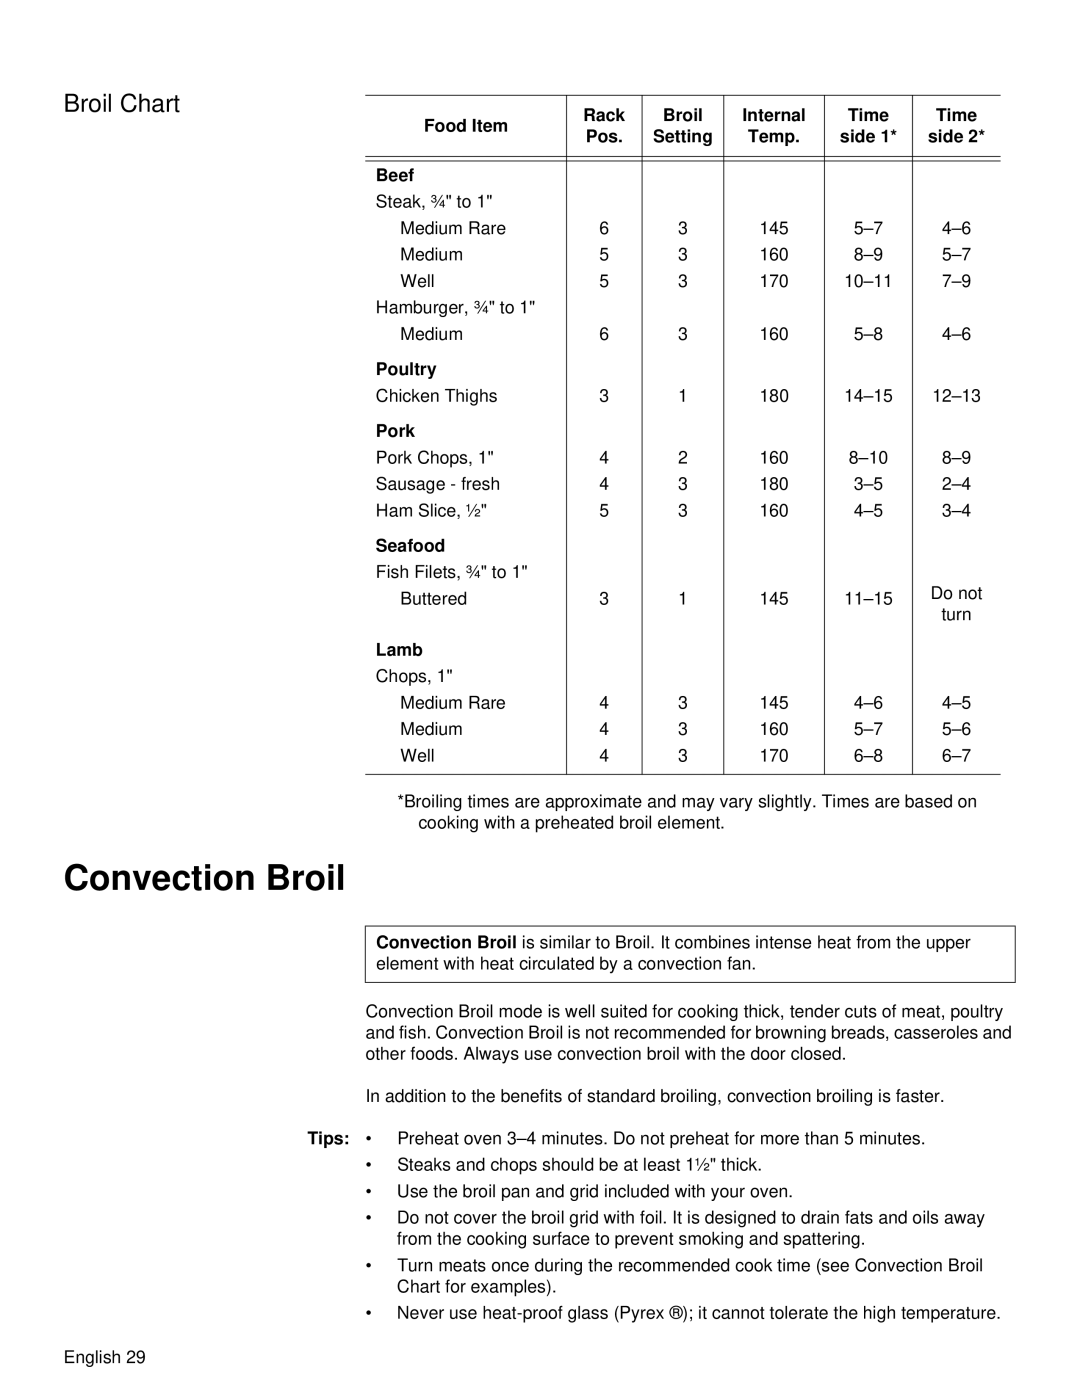 Siemens HB30D51UC, HB30S51UC manual Convection Broil, Broil Chart 